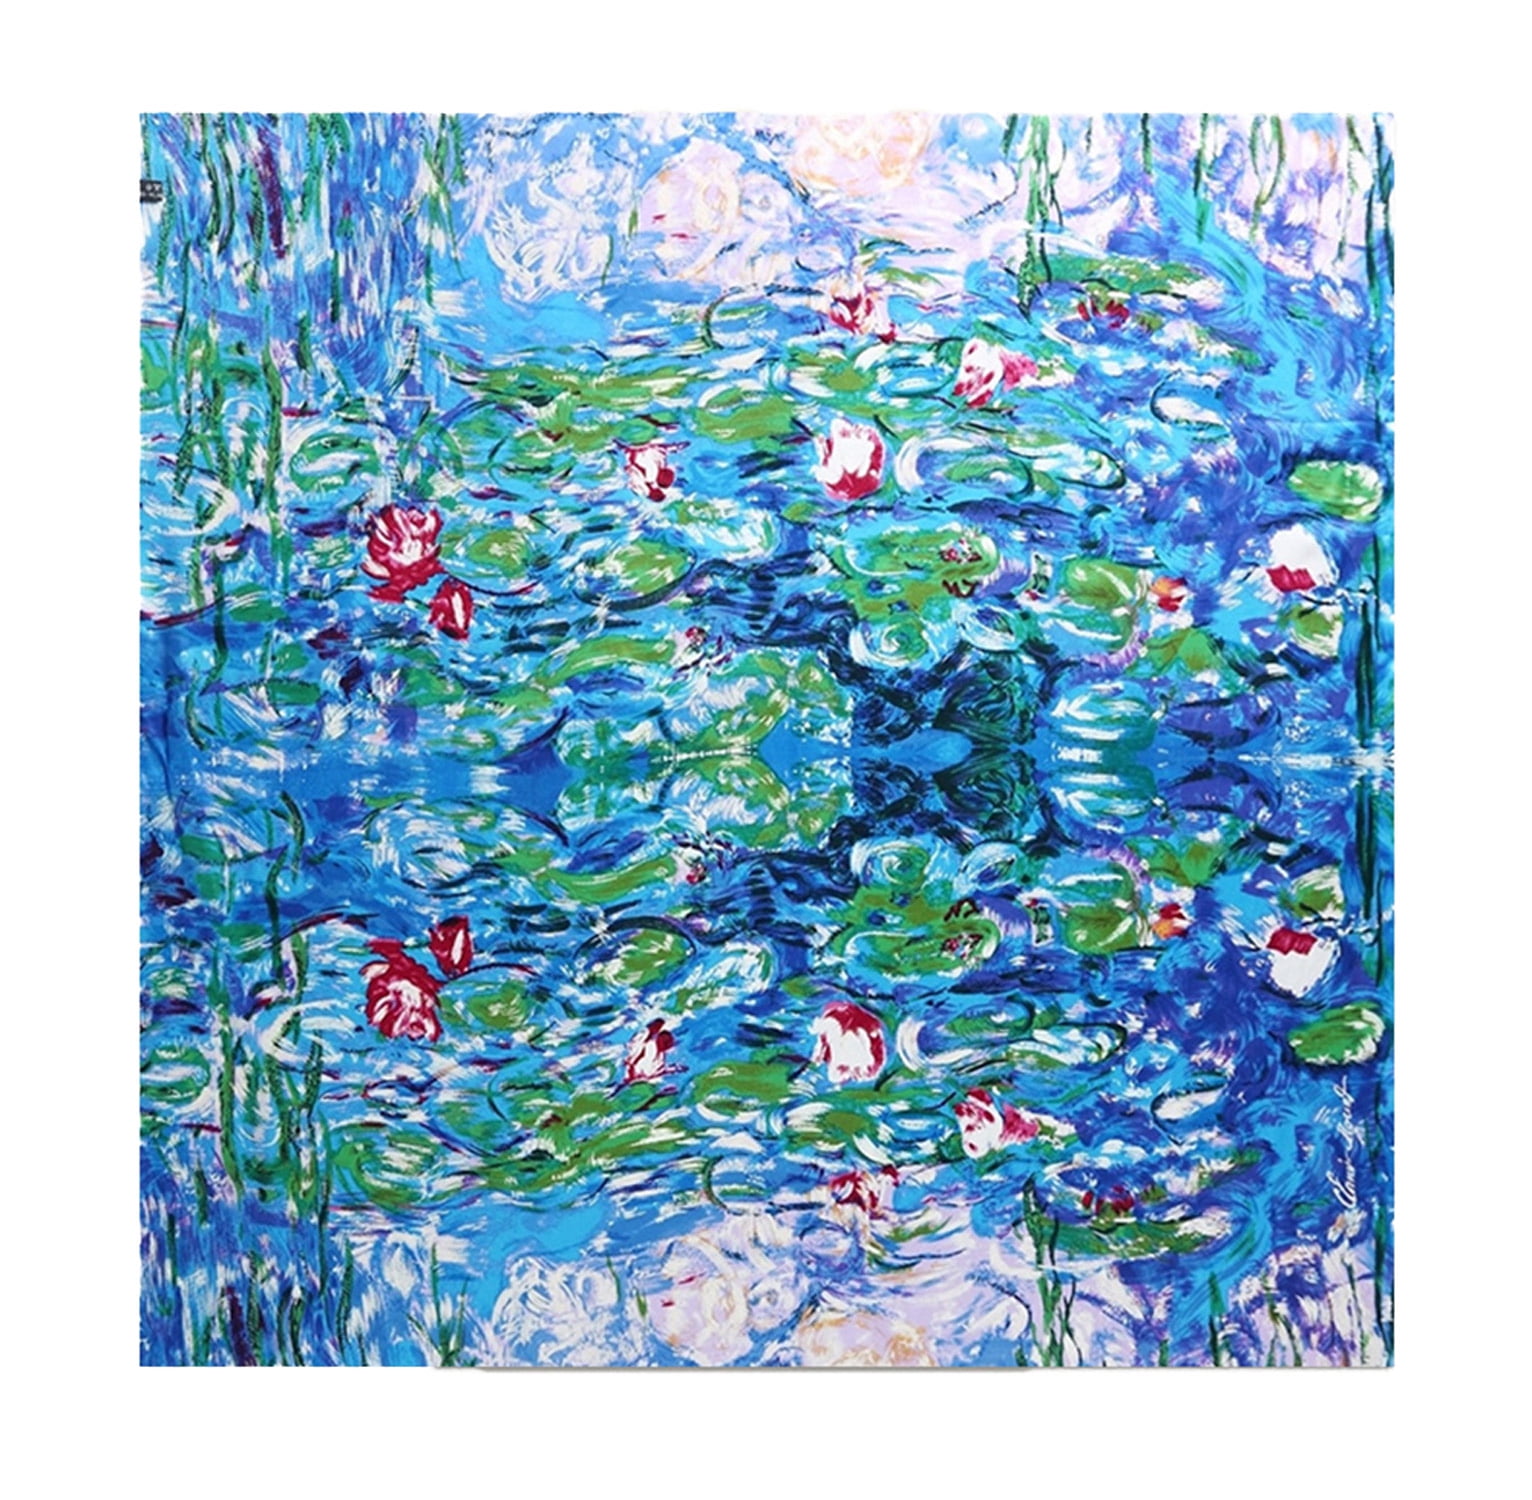 Oblong 100% Charmeuse Silk Scarf Wrap Art Claude Monet's "Impression Sunrise" 